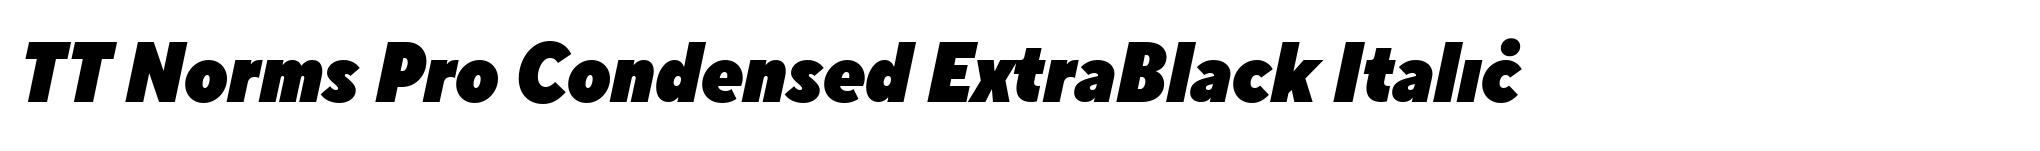 TT Norms Pro Condensed ExtraBlack Italic image